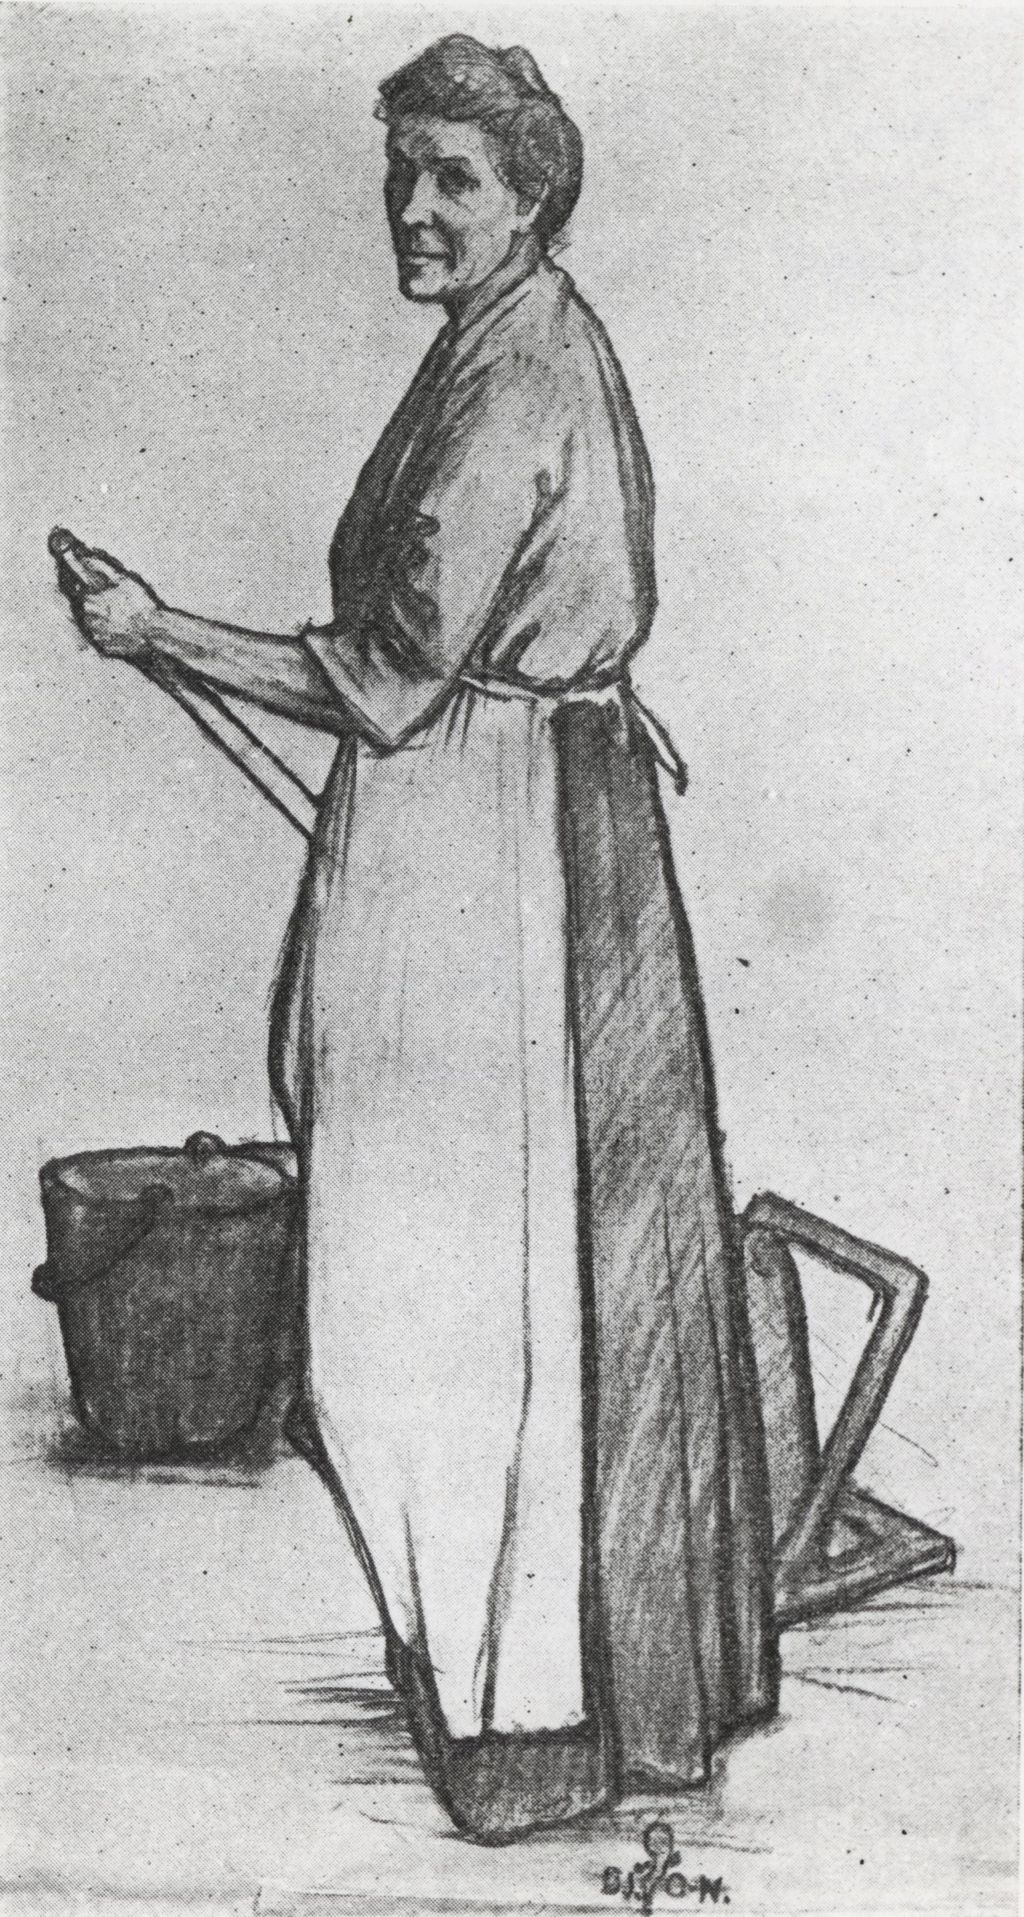 Miniature of "Mrs. Sweeney, the scrub woman" drawing